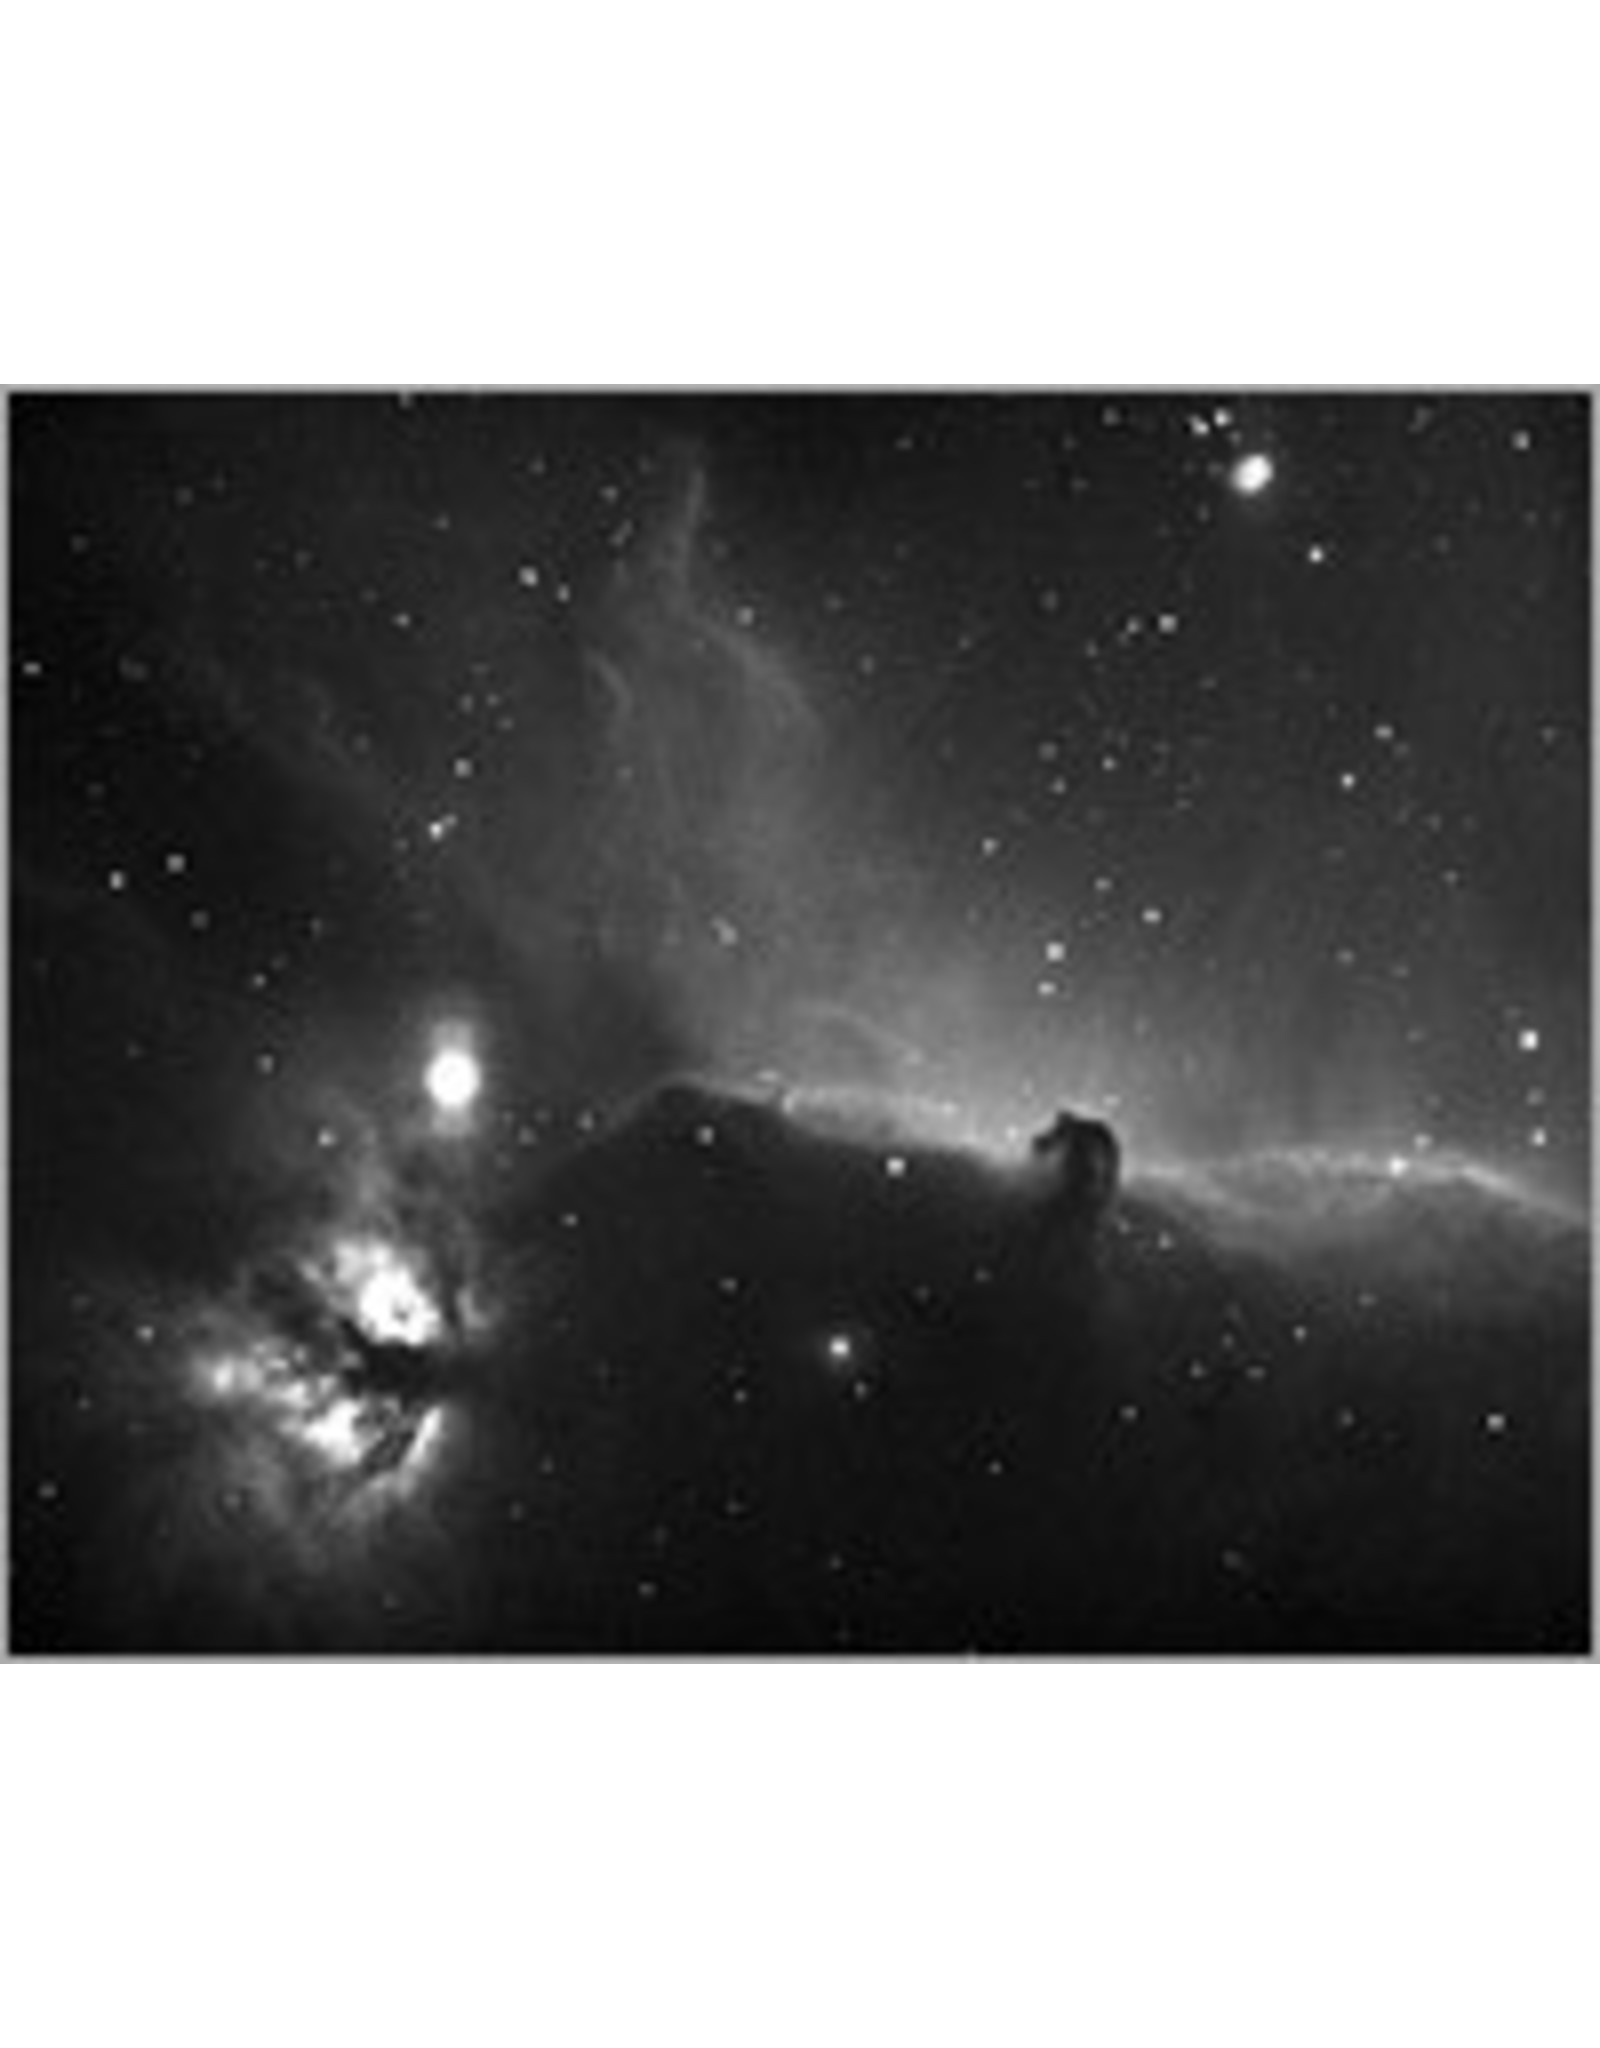 Tele vue TV76 APO Telescope - Ivory OTA